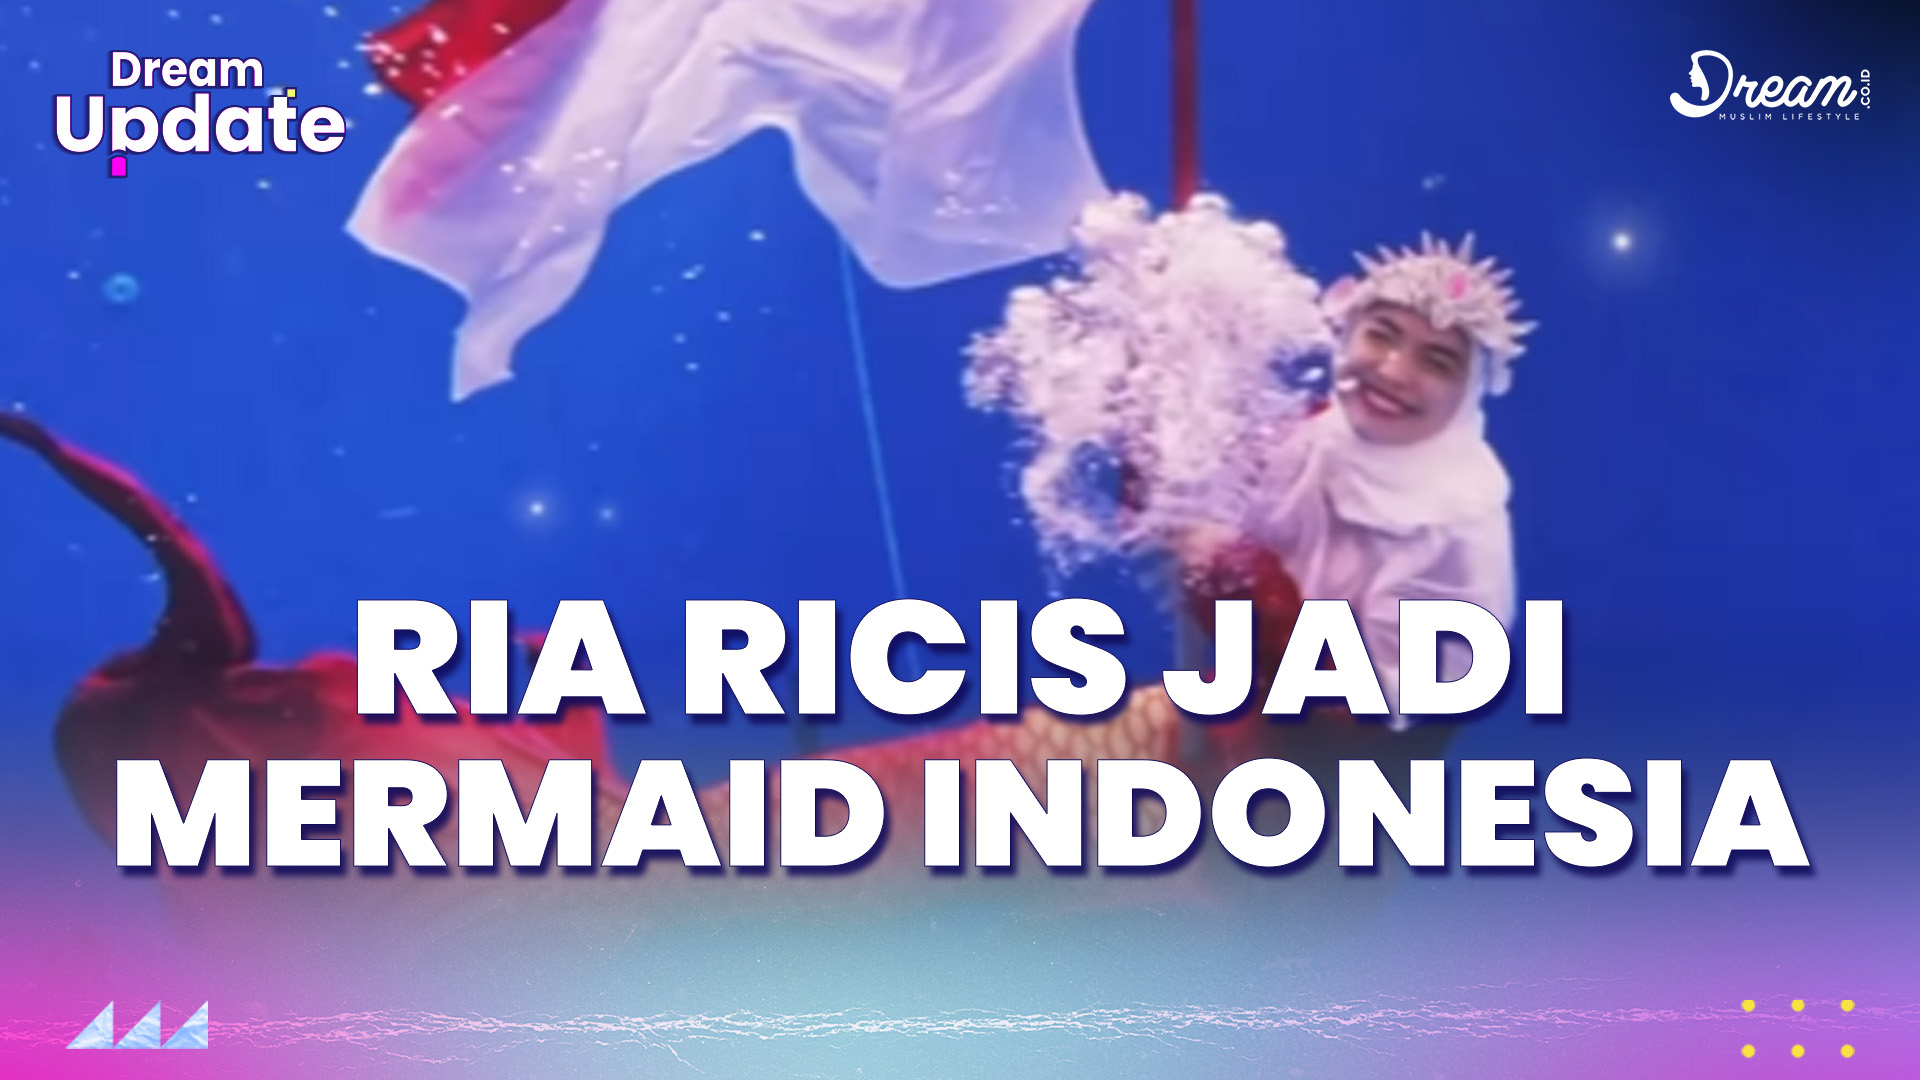 Ria Ricis Jadi Mermaid Indonesia dan Ubah Wajah Jadi Garuda Pancasila